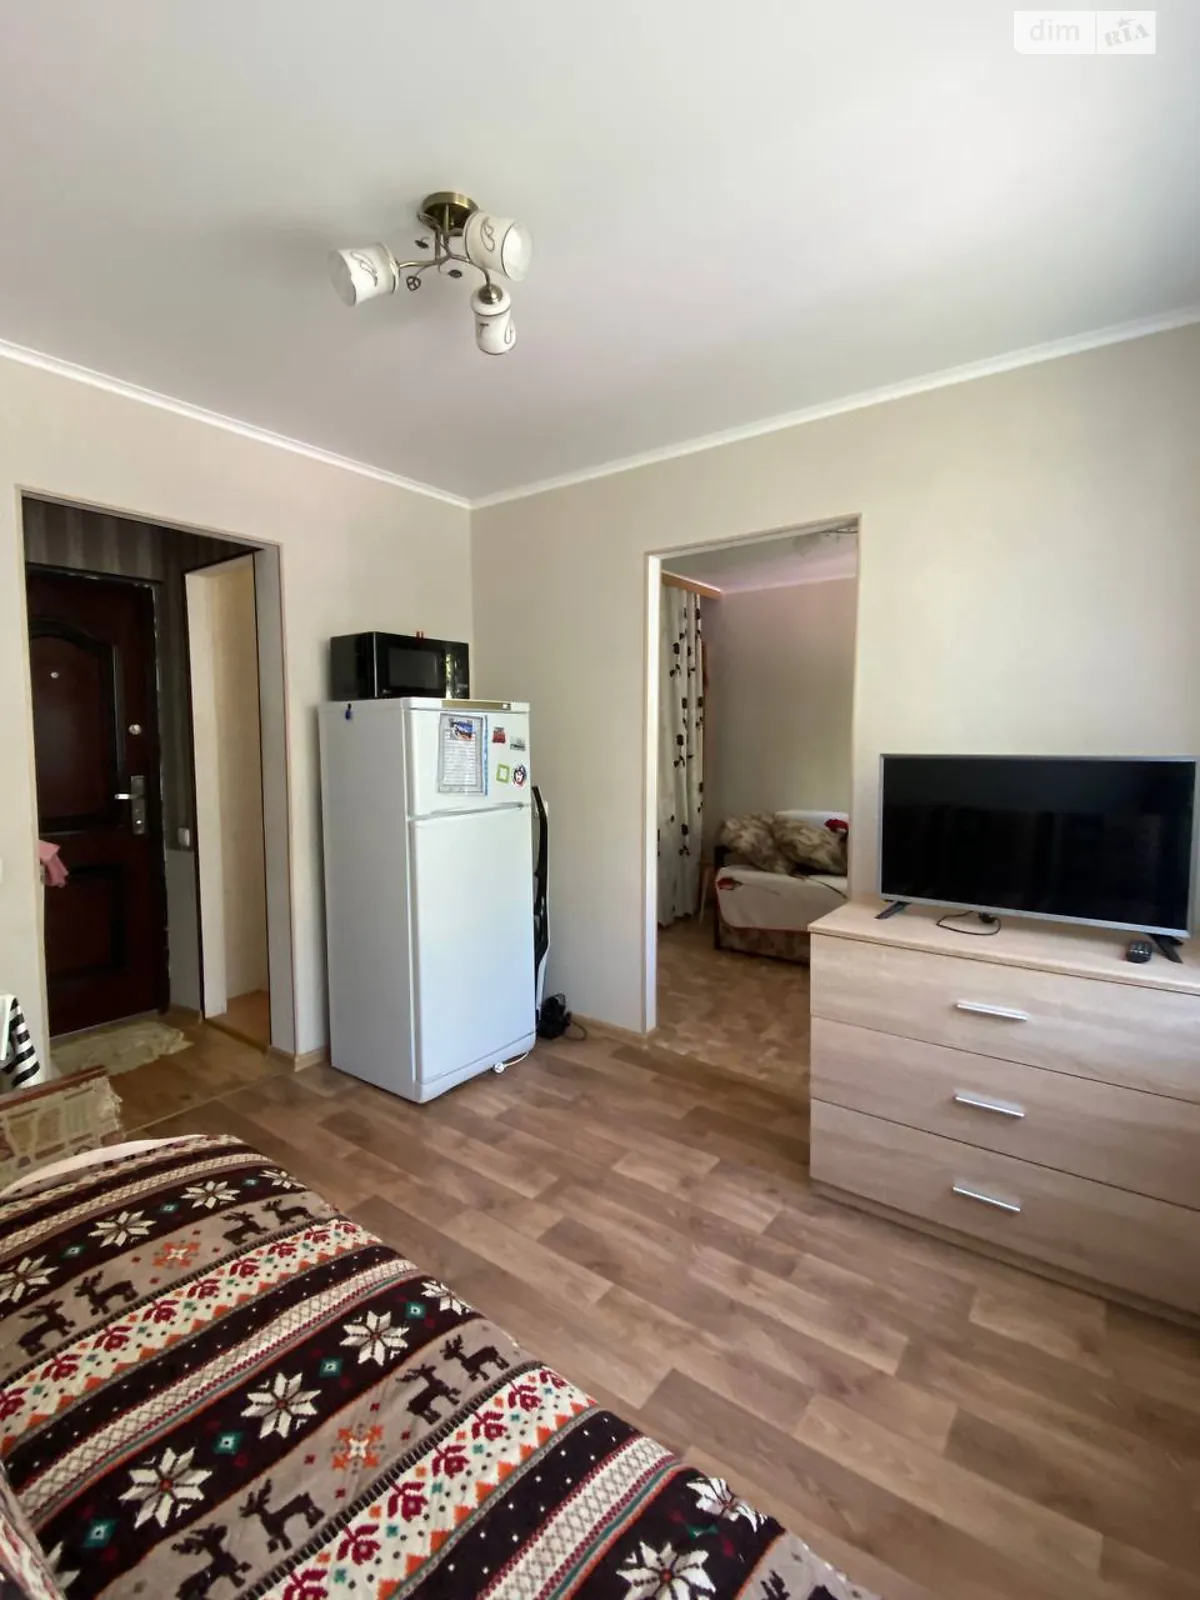 Продается комната 30 кв. м в Черноморске, цена: 15000 $ - фото 1